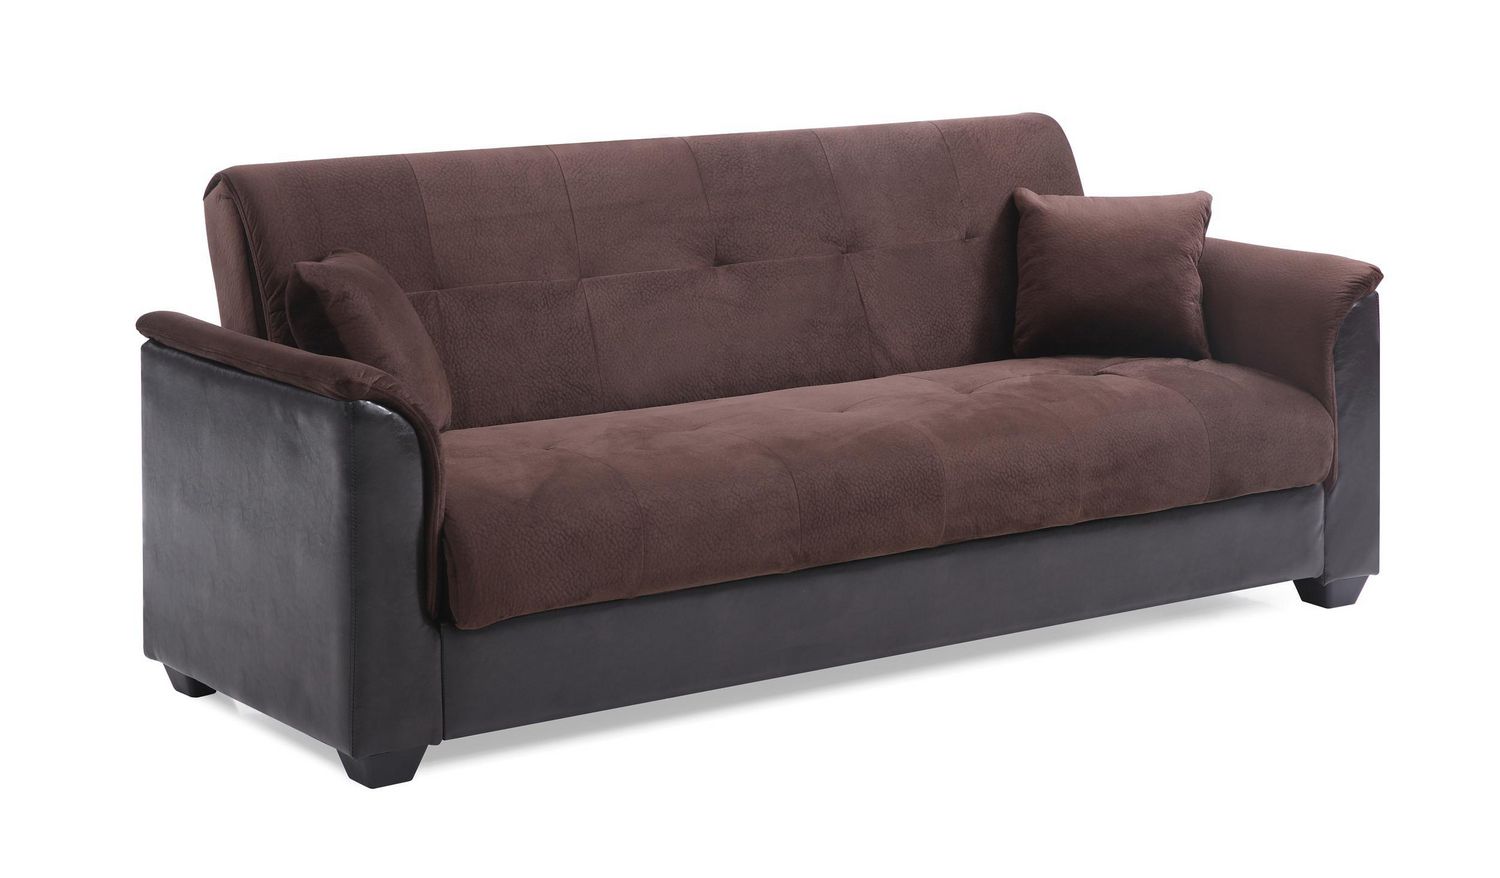 nathaniel home champion futon sofa bed